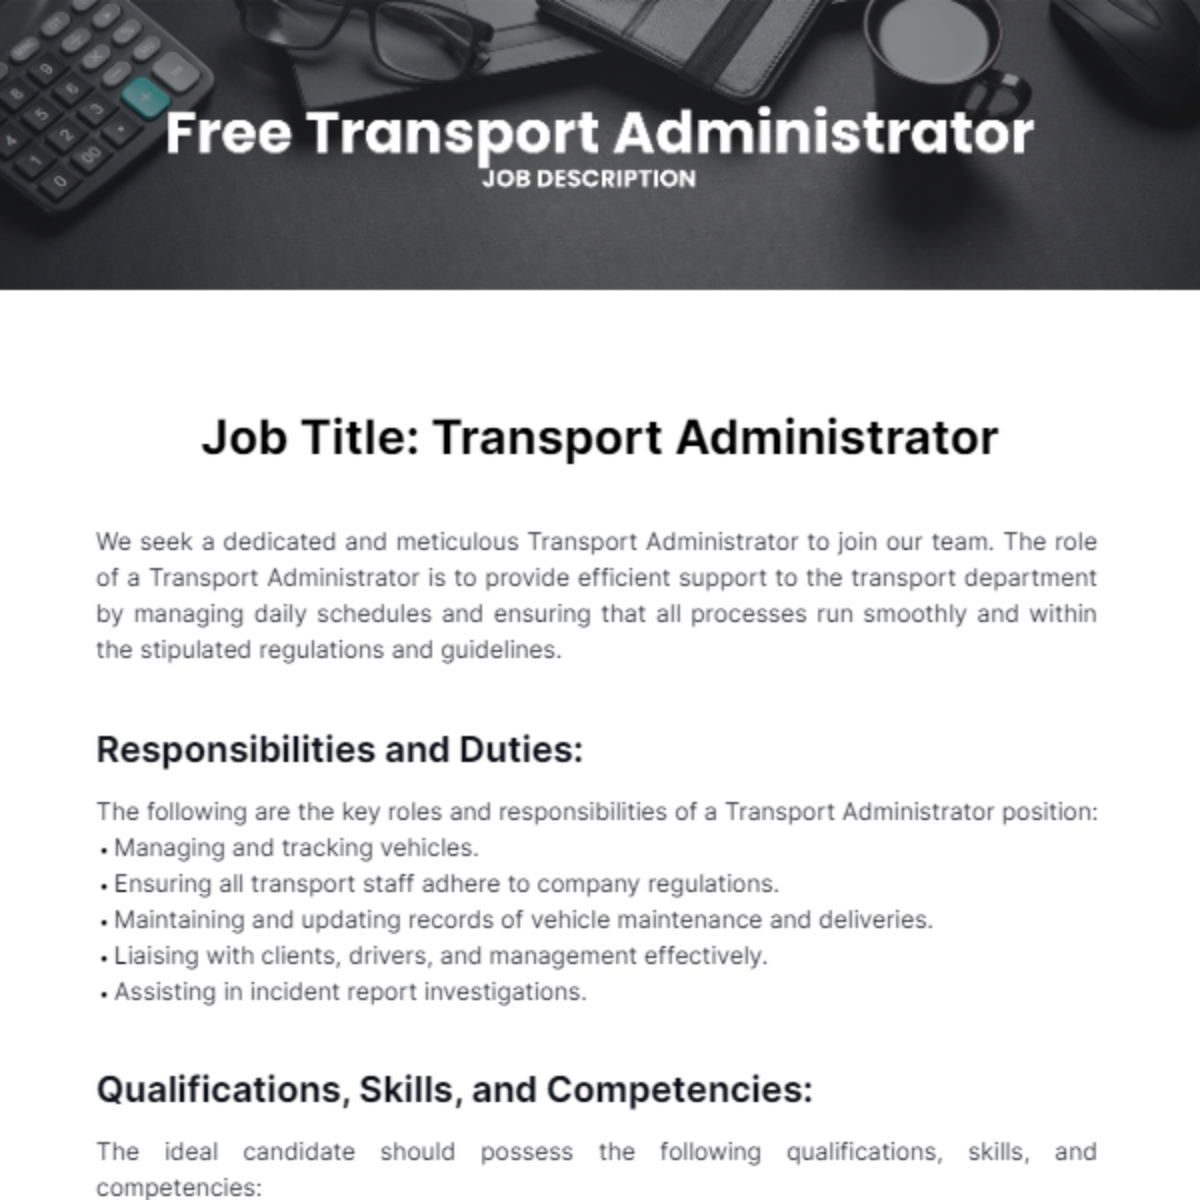 Free Transport Administrator Job Description Template